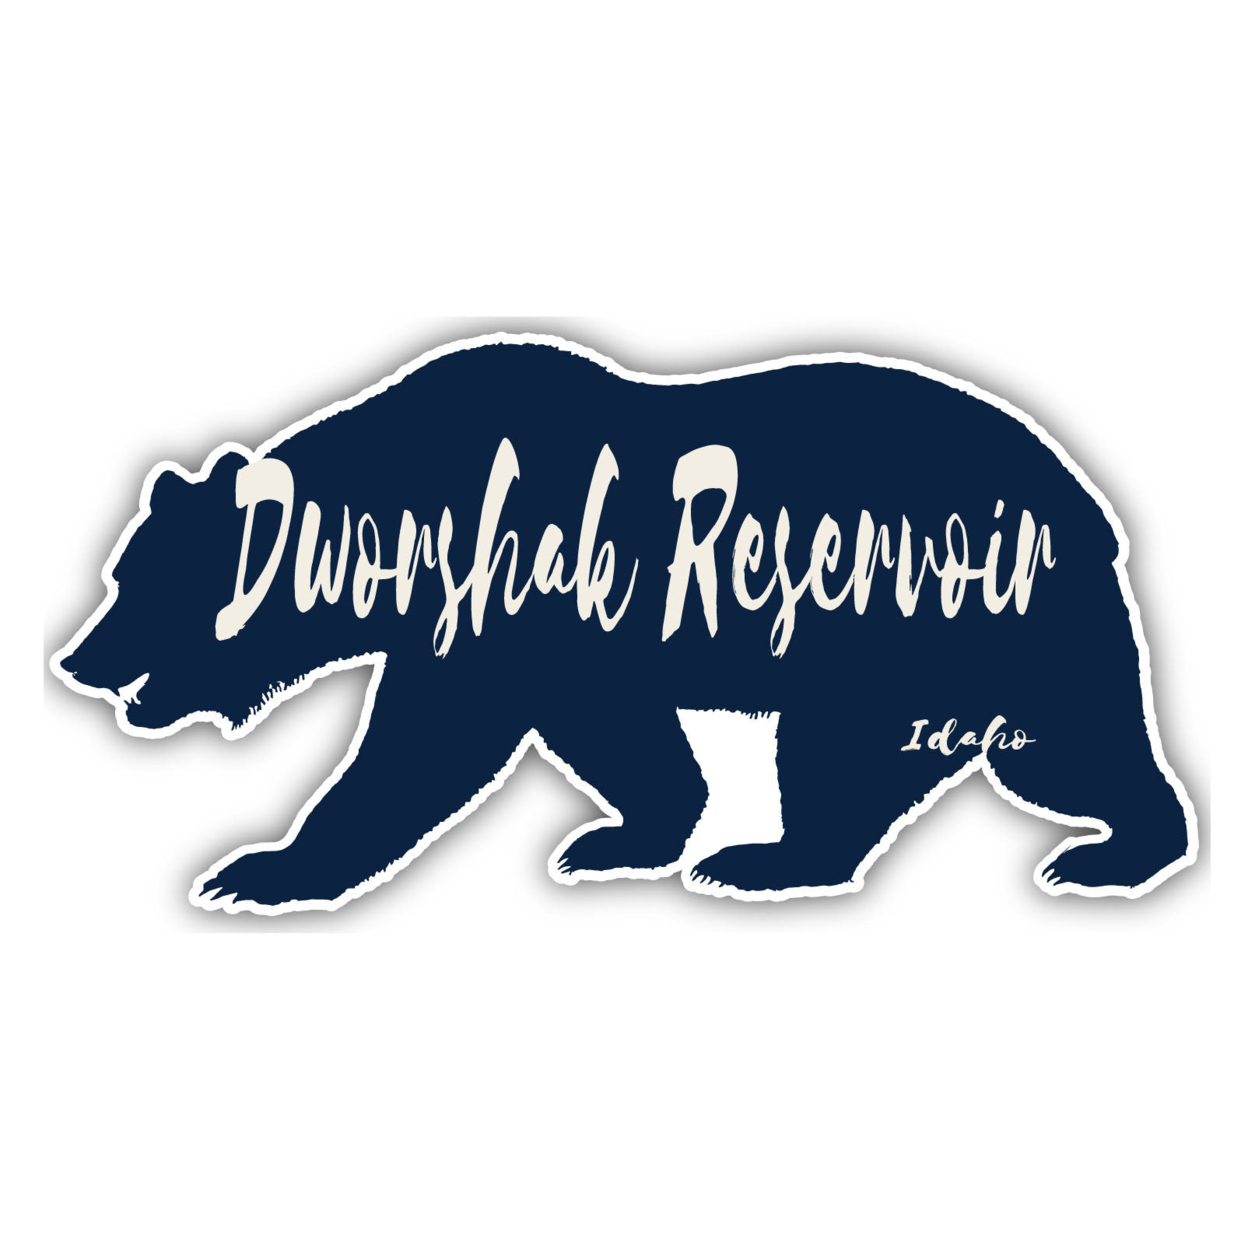 Dworshak Reservoir Idaho Souvenir Decorative Stickers (Choose Theme And Size) - Single Unit, 4-Inch, Tent